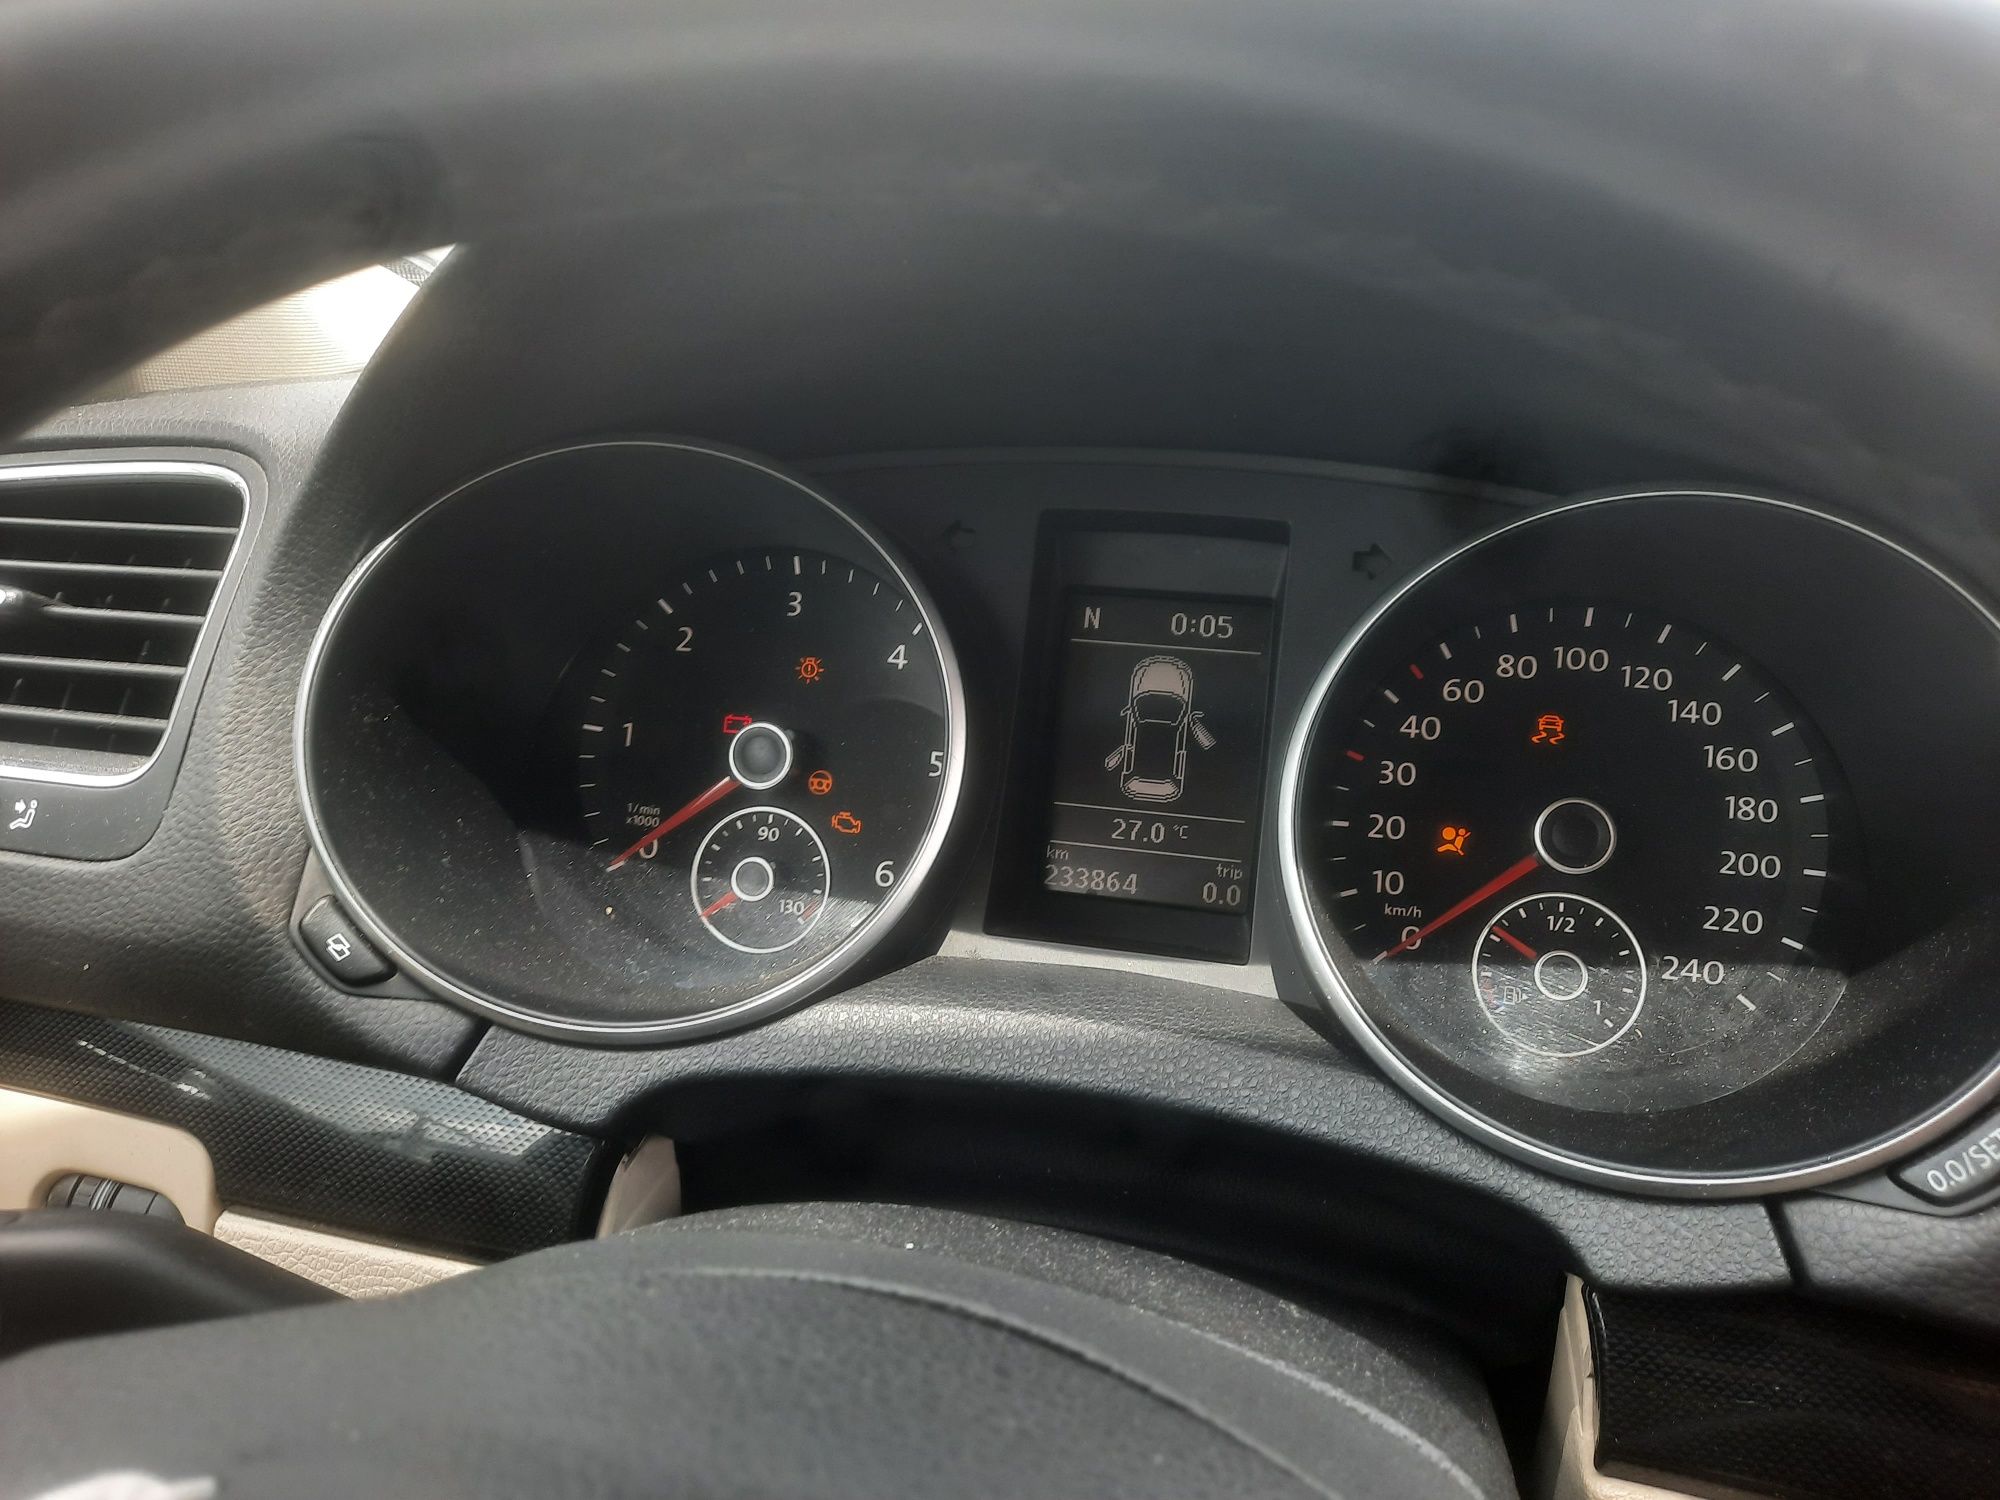 Ceasuri bord VW Golf 6 diesel  maxidot in km auto cu volan normal